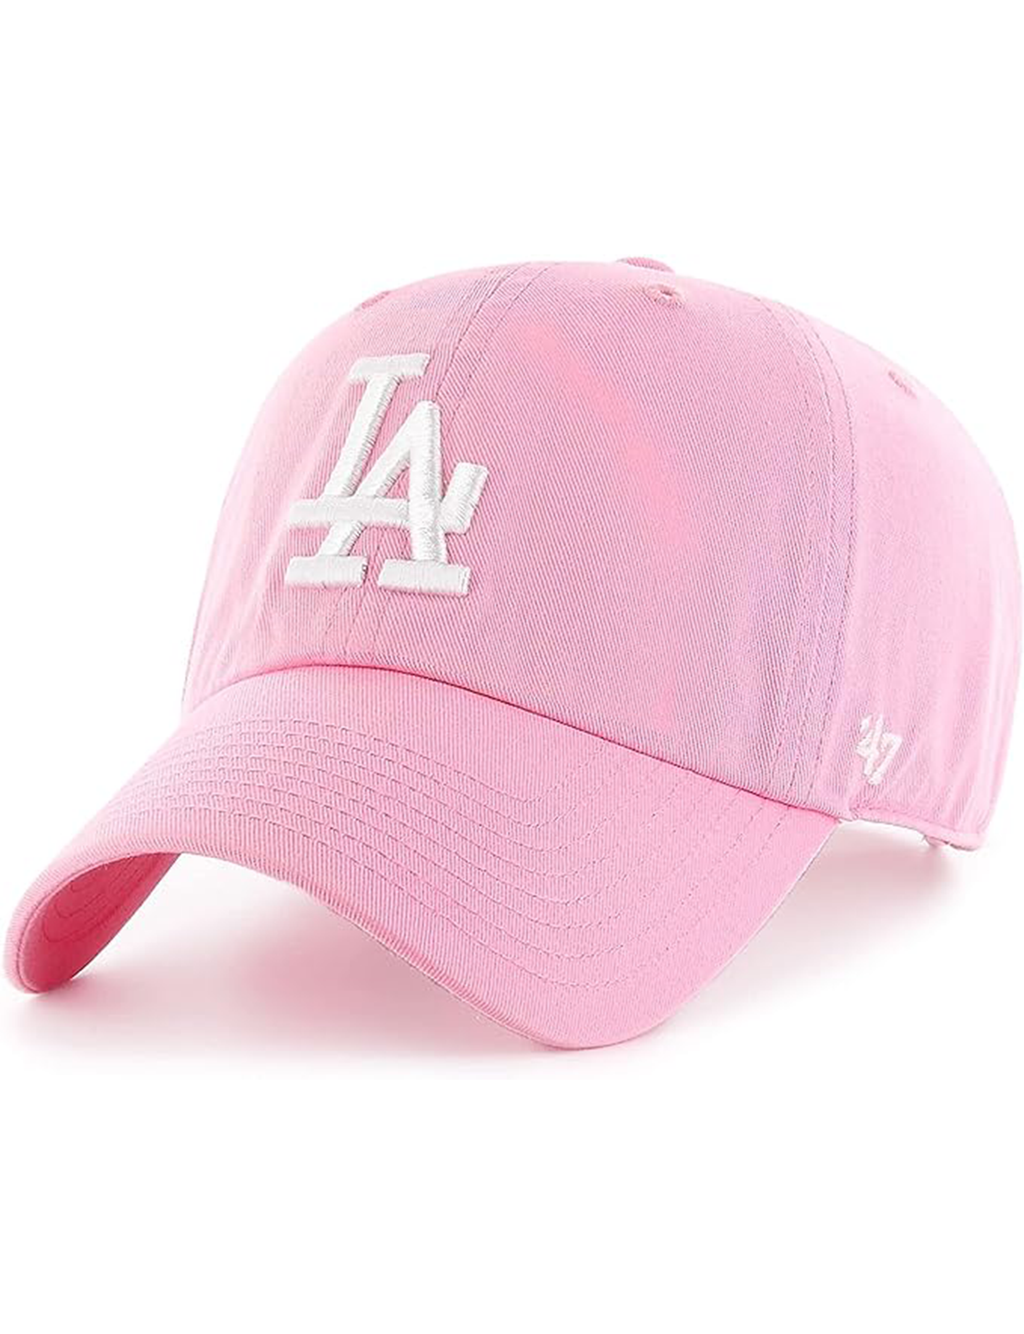 LA Dodgers Basic Ball Cap, Rose/White